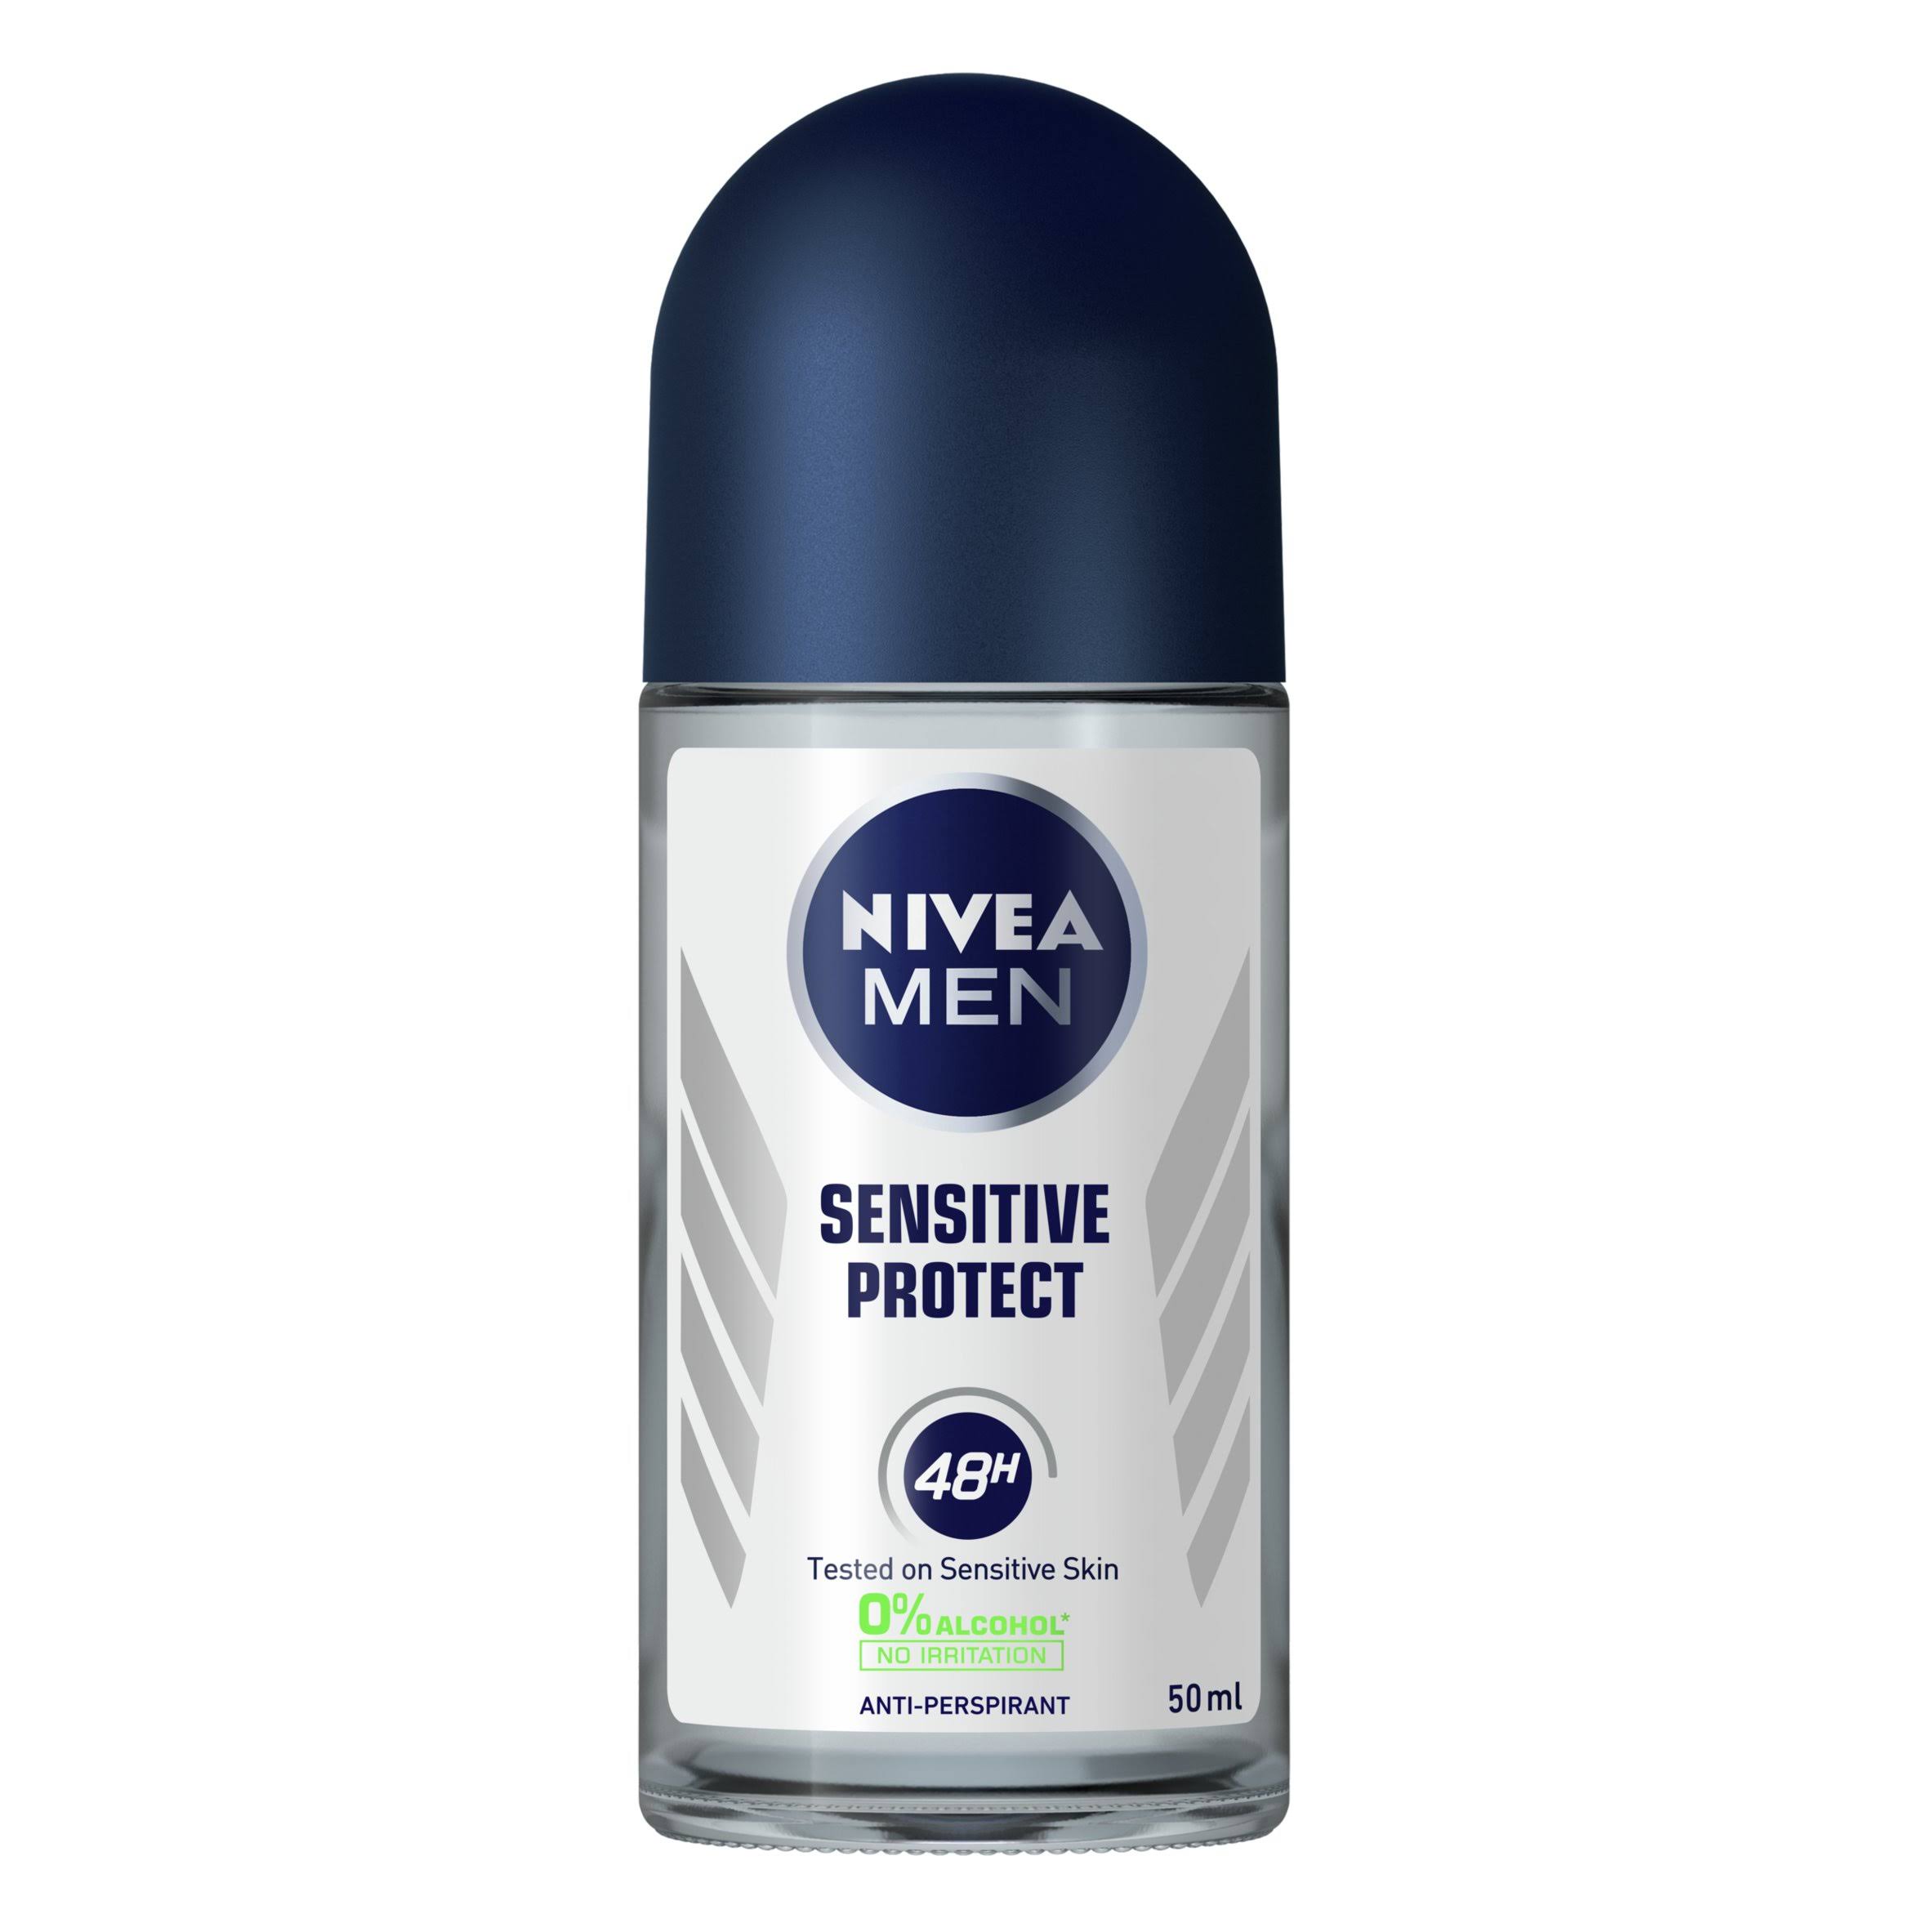 Nivea Men Sensitive Protect Anti Perspirant Deodorant Roll On - 50ml